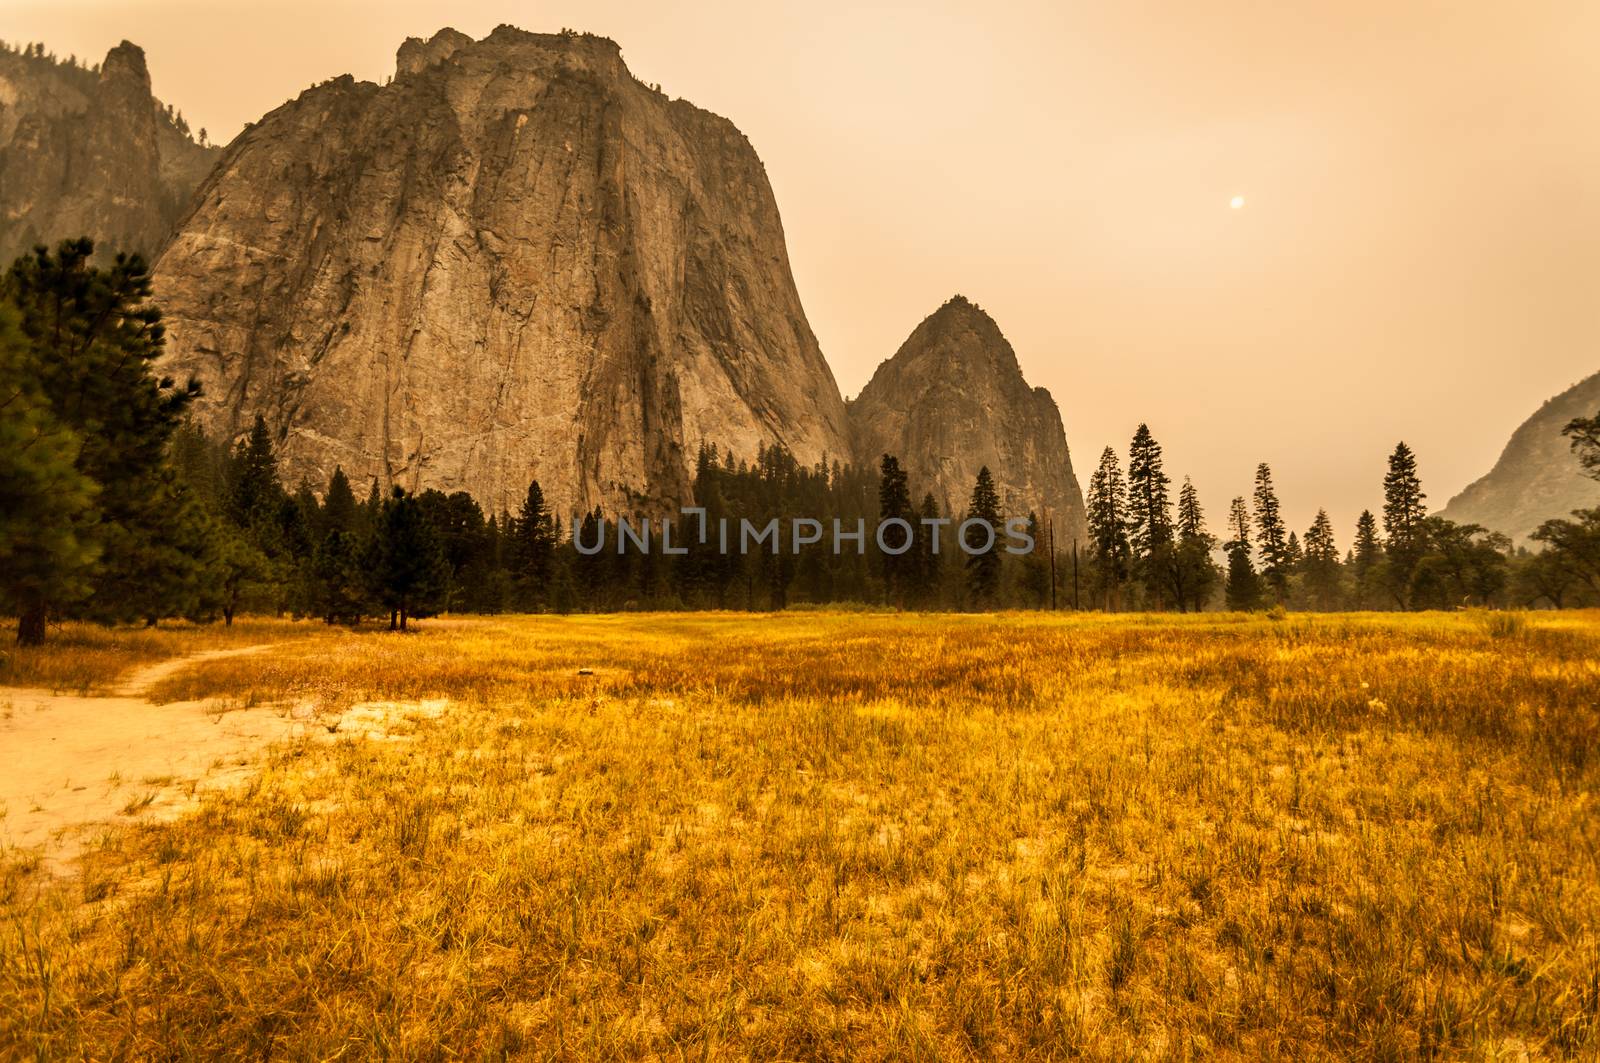 Yosemite on fire by weltreisendertj